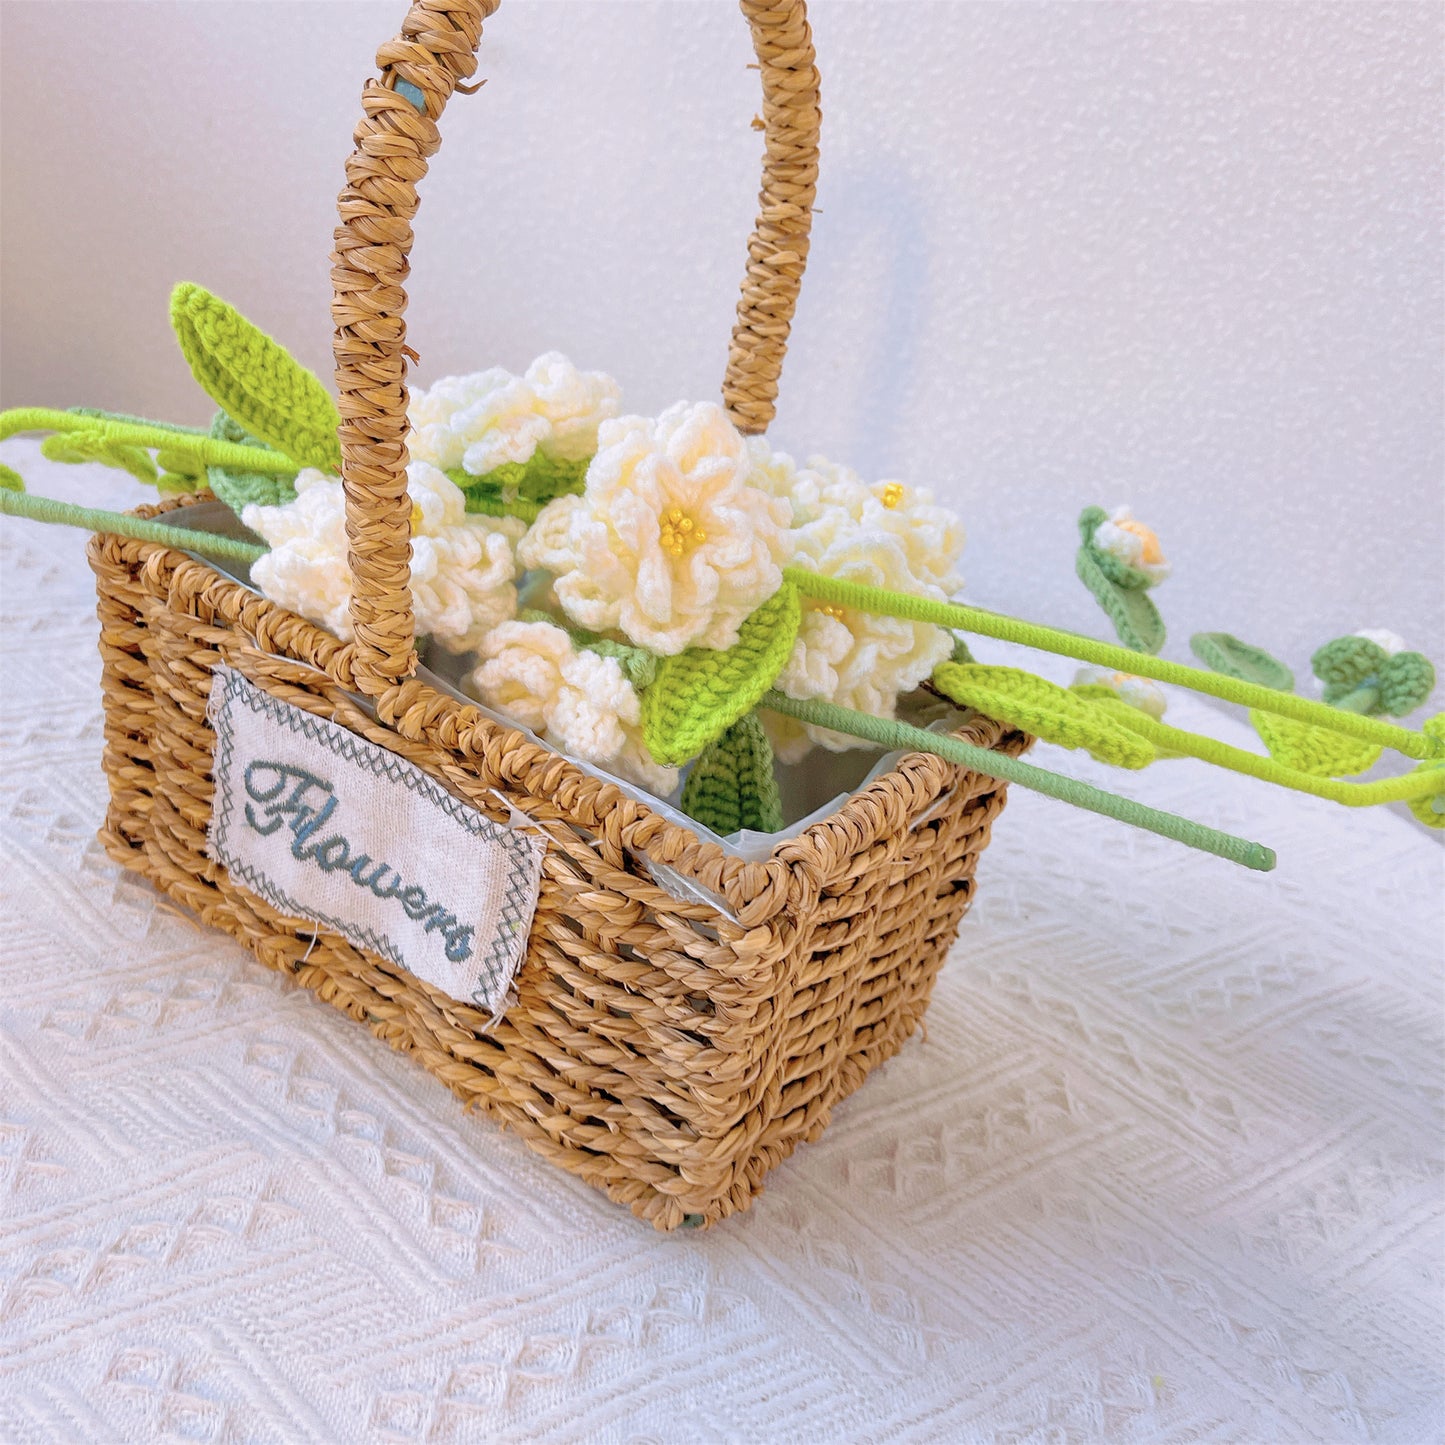 Elegant Beauty: Handcrafted Crochet Gardenias Stake for a Sophisticated Garden Decor